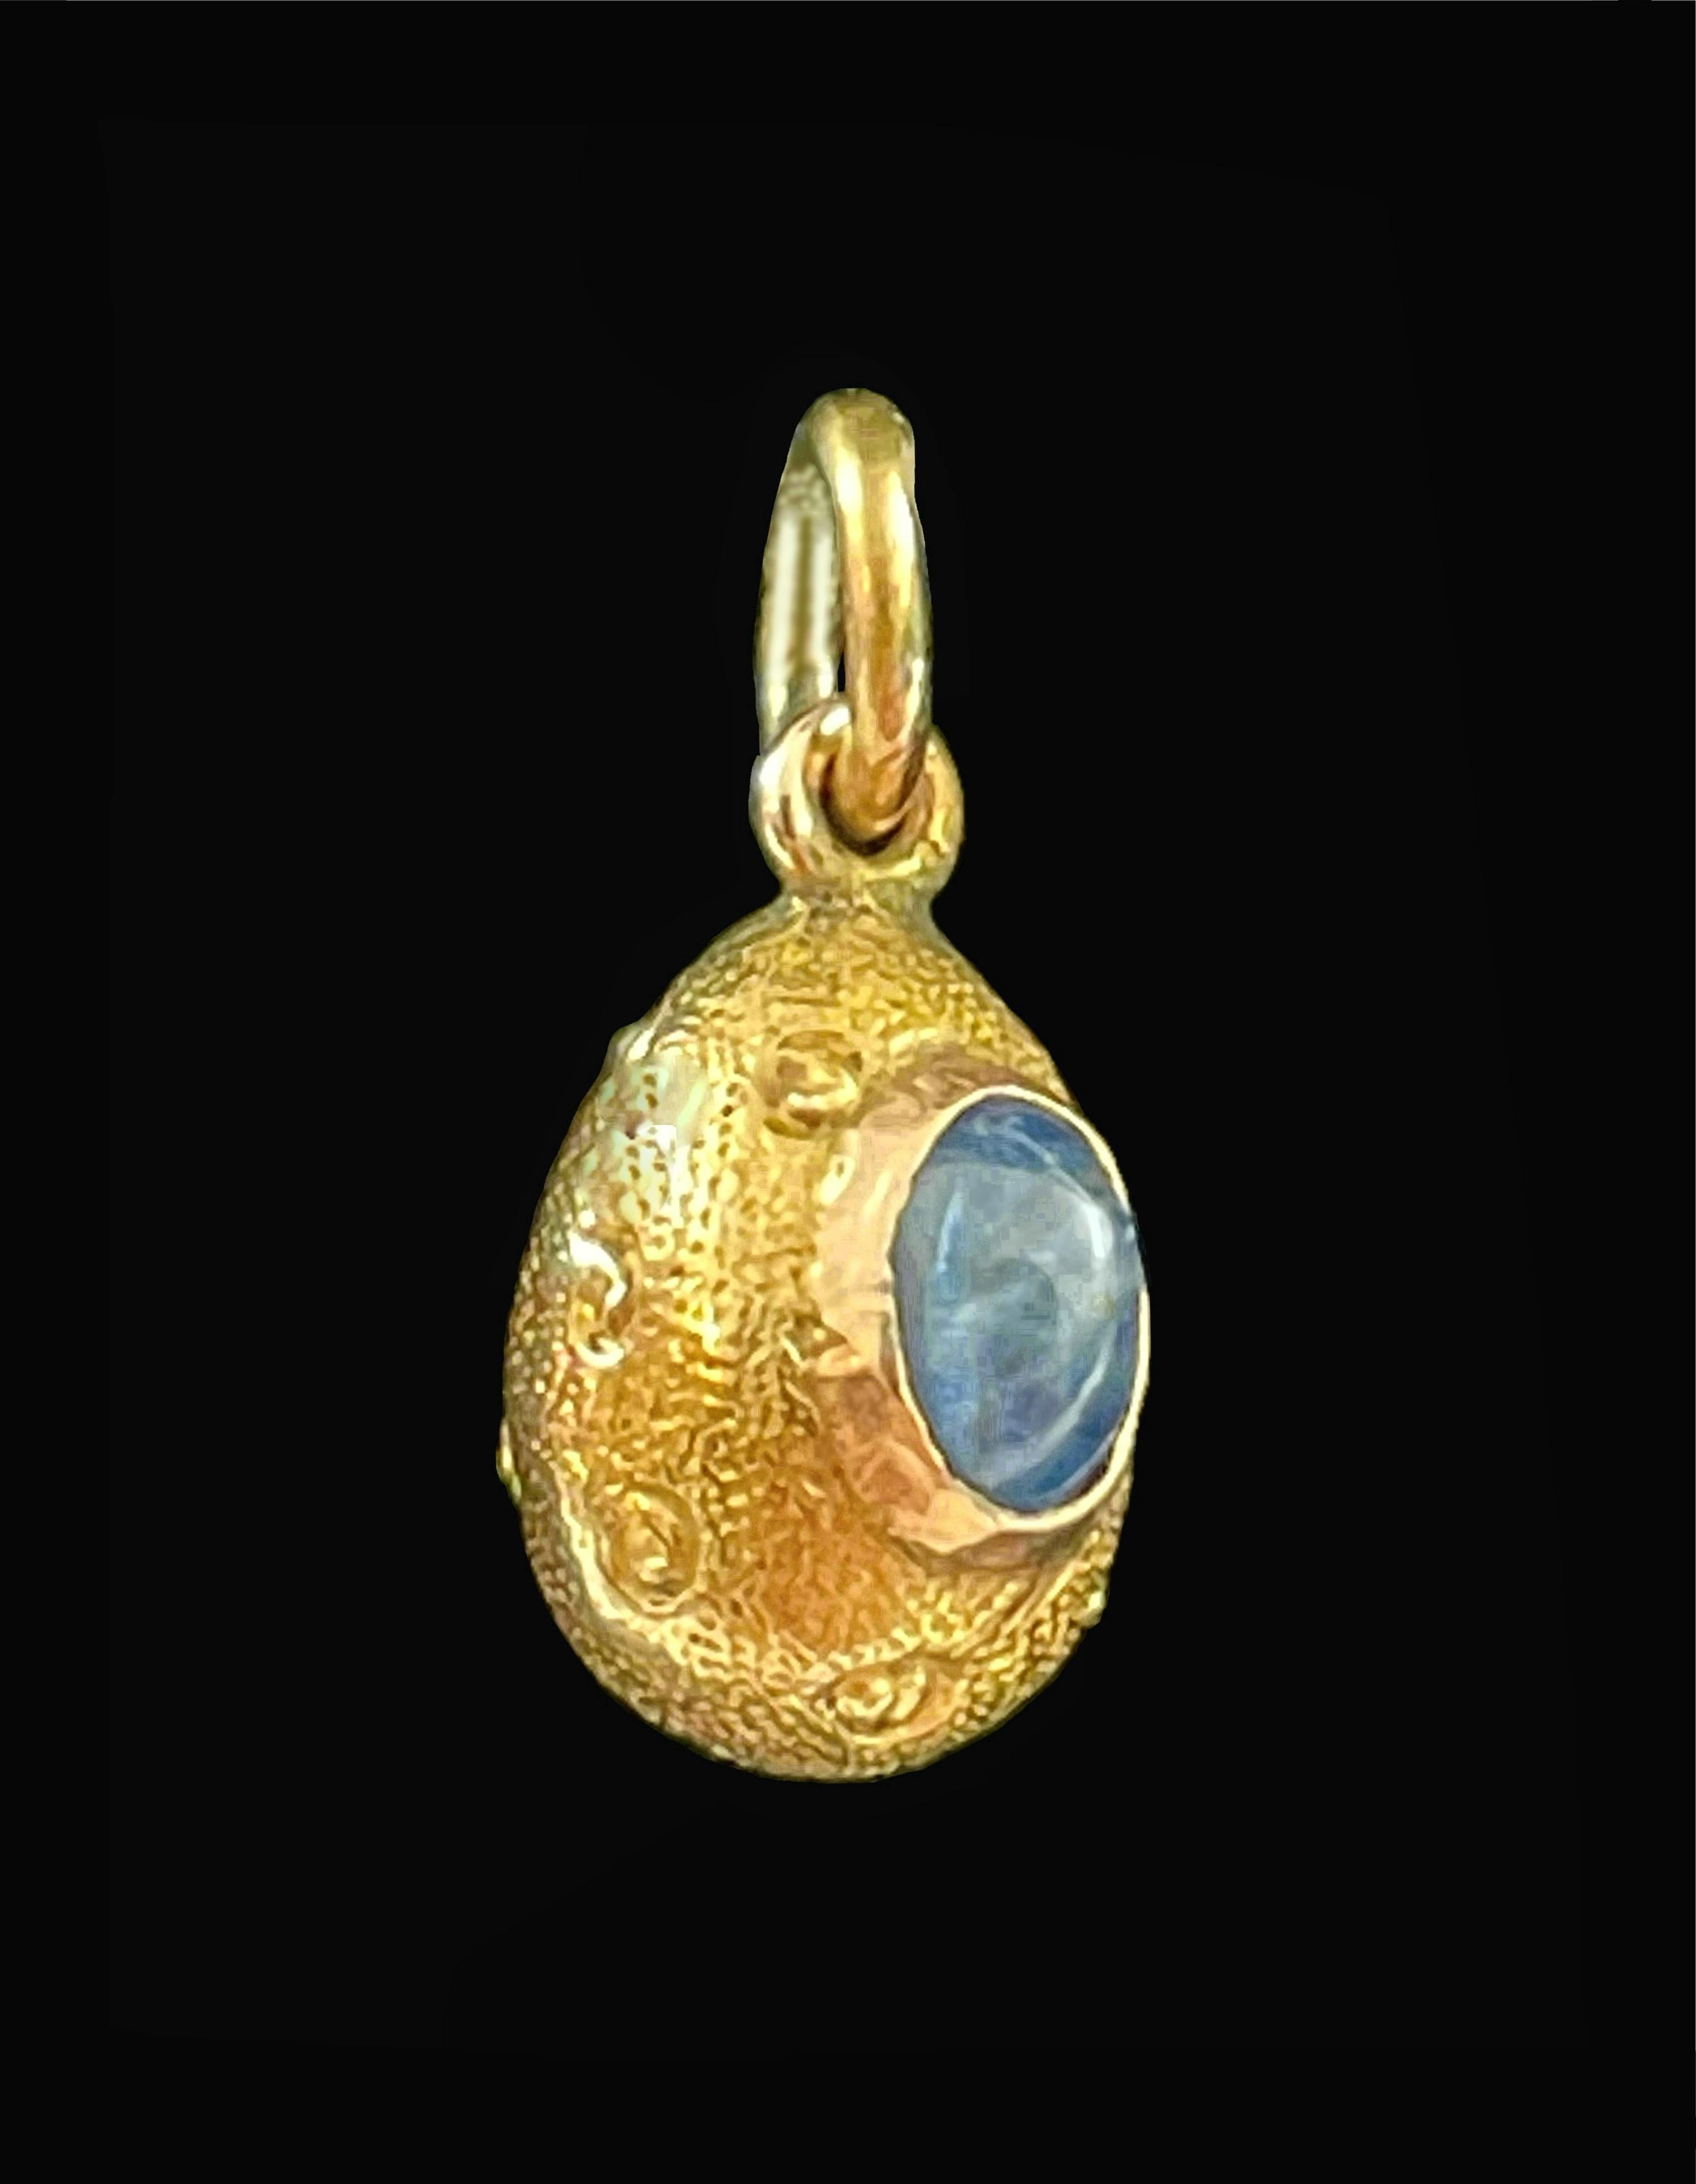 Romantic Antique 14K Gold & Cornflower Blue Sapphire Egg Pendant - Early 20th Century